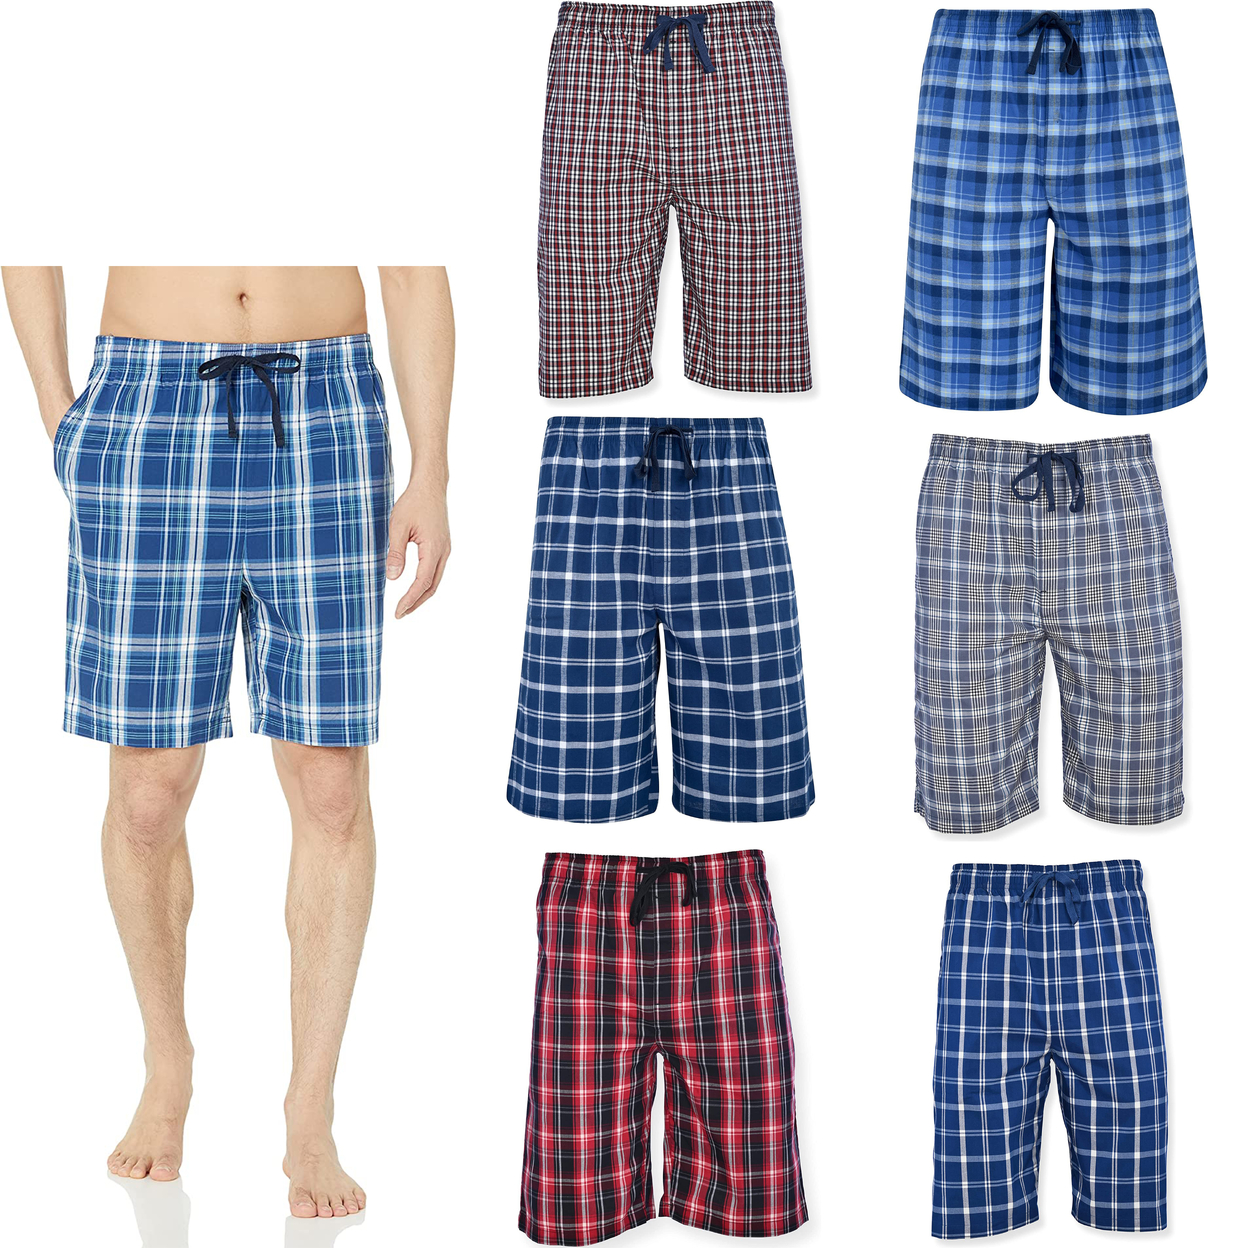 2-Pack: Men's Ultra Soft Plaid Lounge Pajama Sleep Wear Shorts - Black & Grey, Small